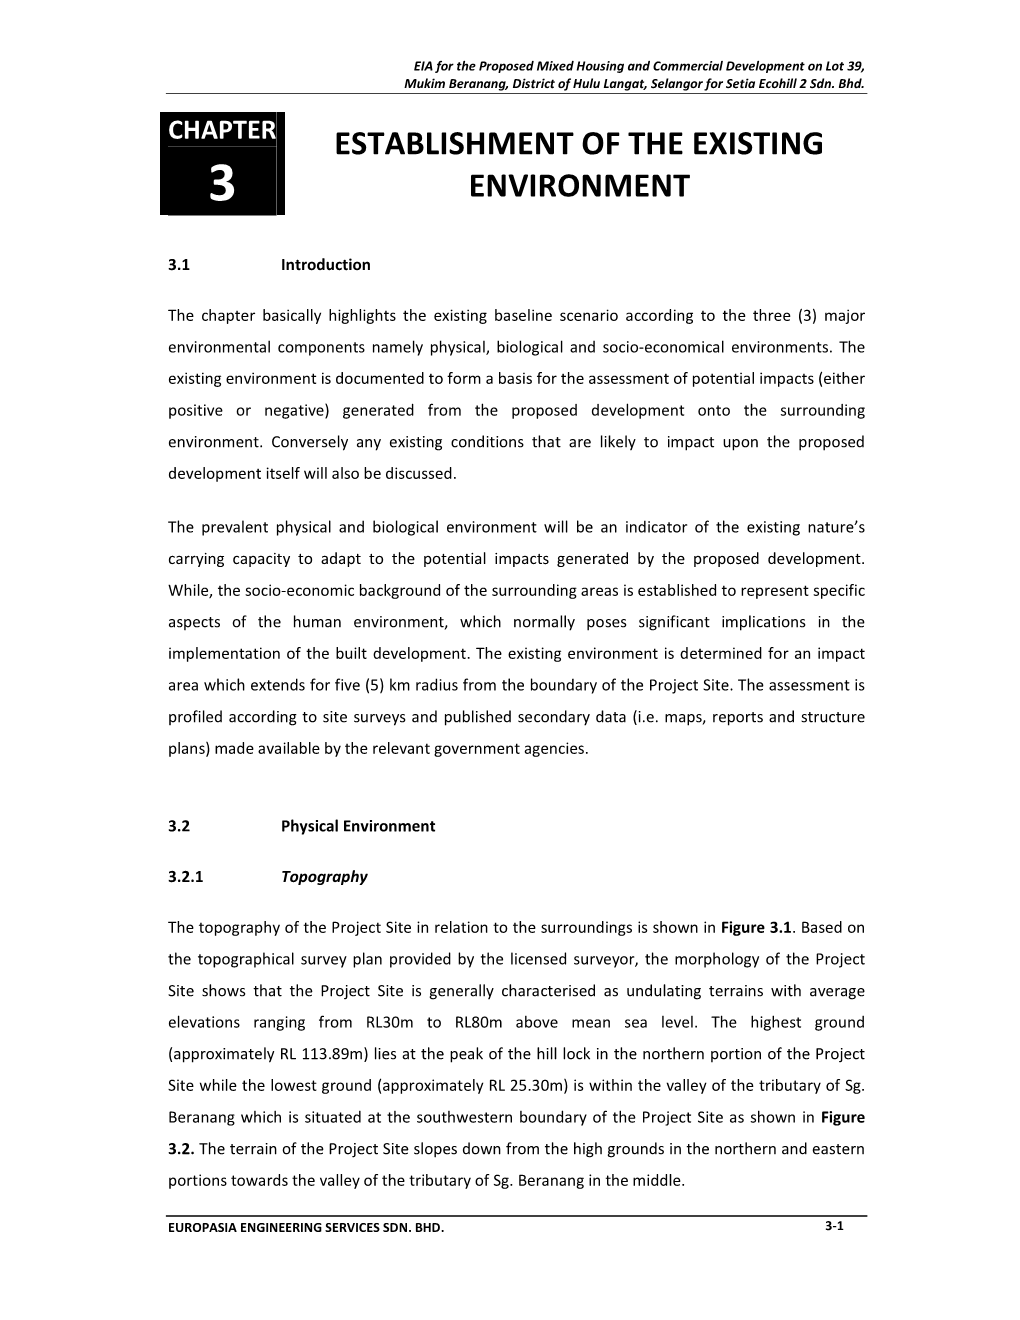 Establishment of the Existing Environment